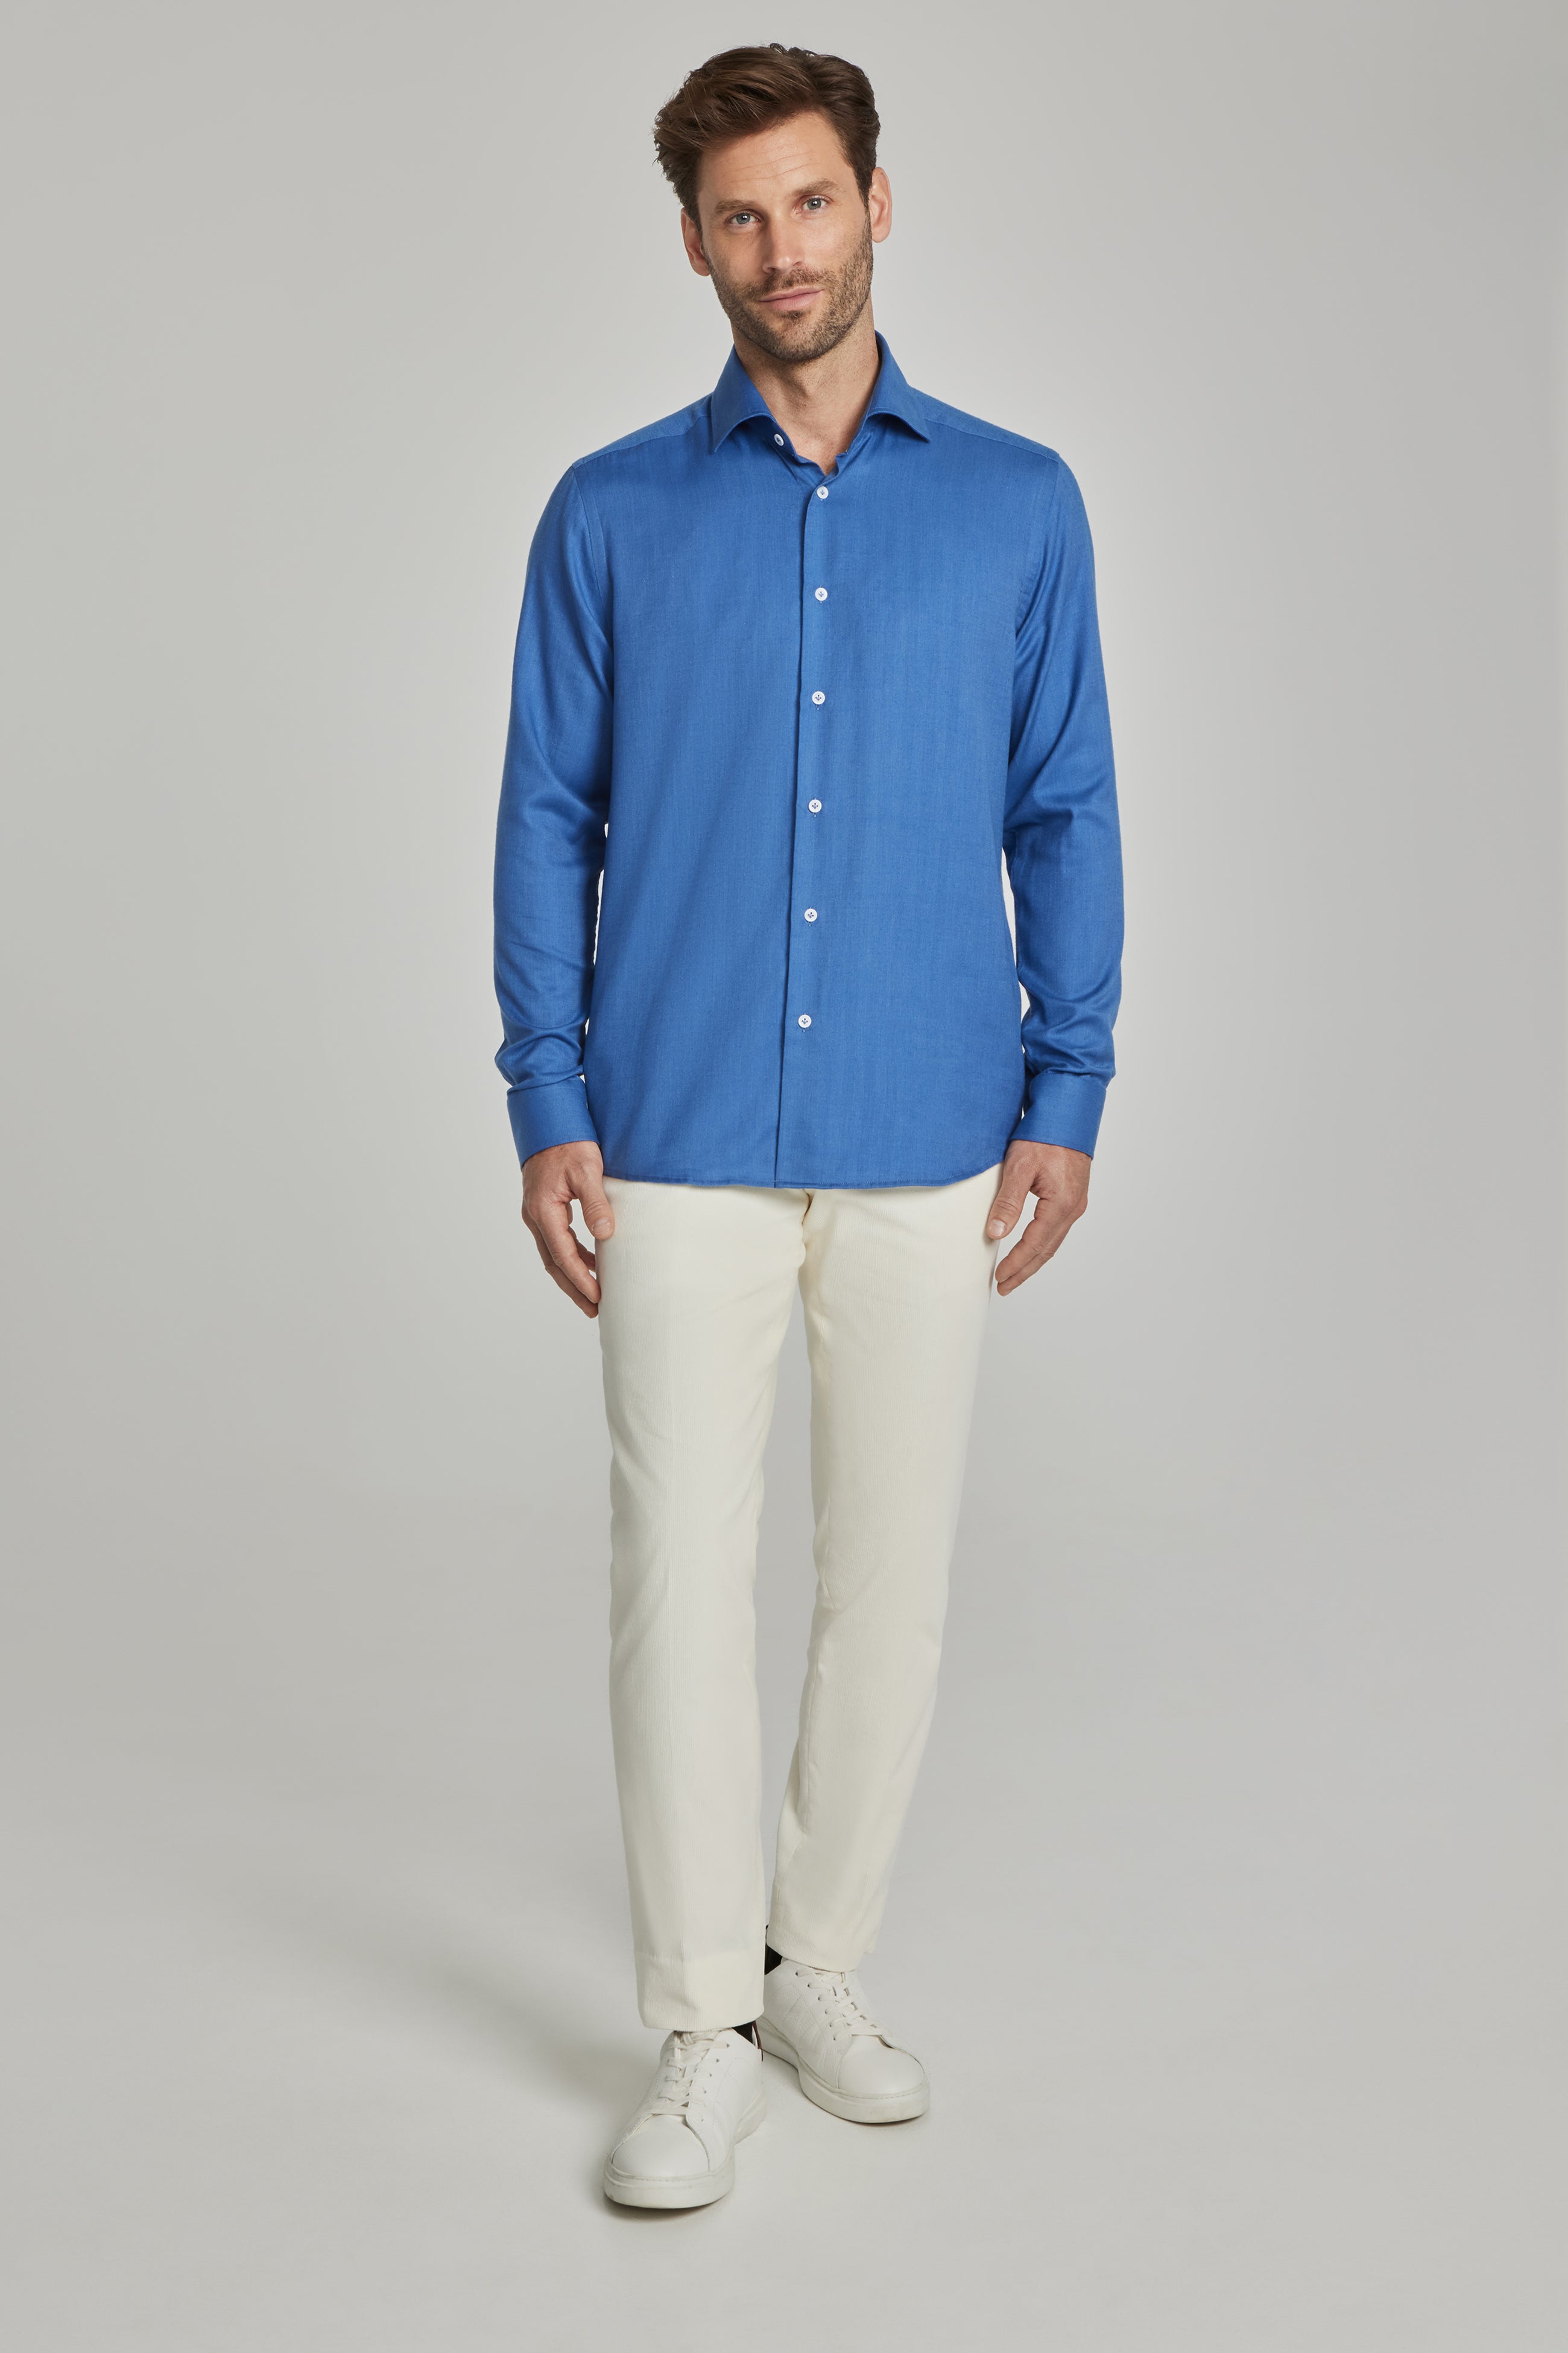 Bellamy Blue Herringbone Cotton and Lyocell Shirt